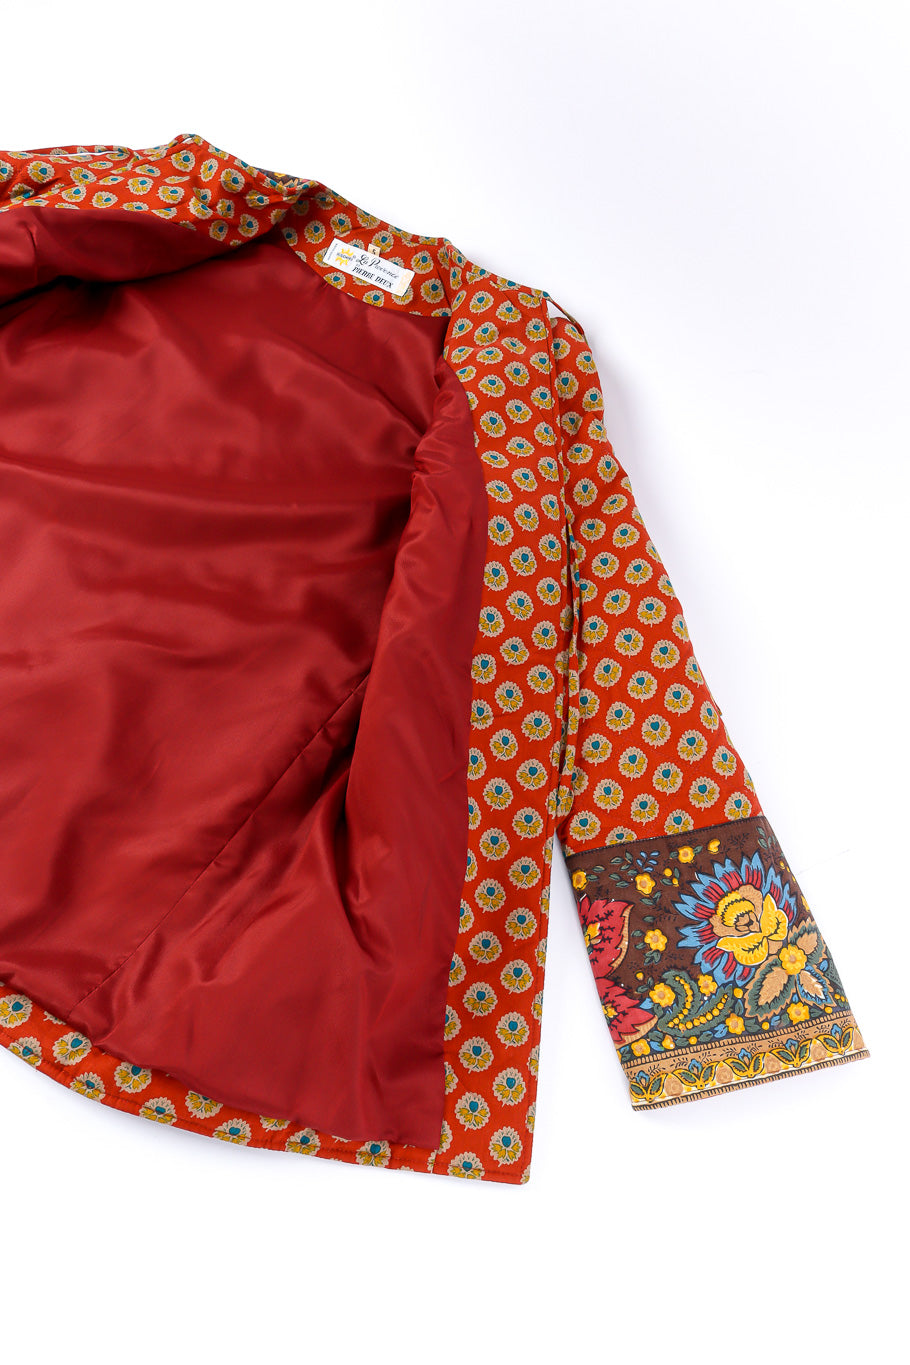 Batik print quilted jacket by La Provence flat lay lining @recessla